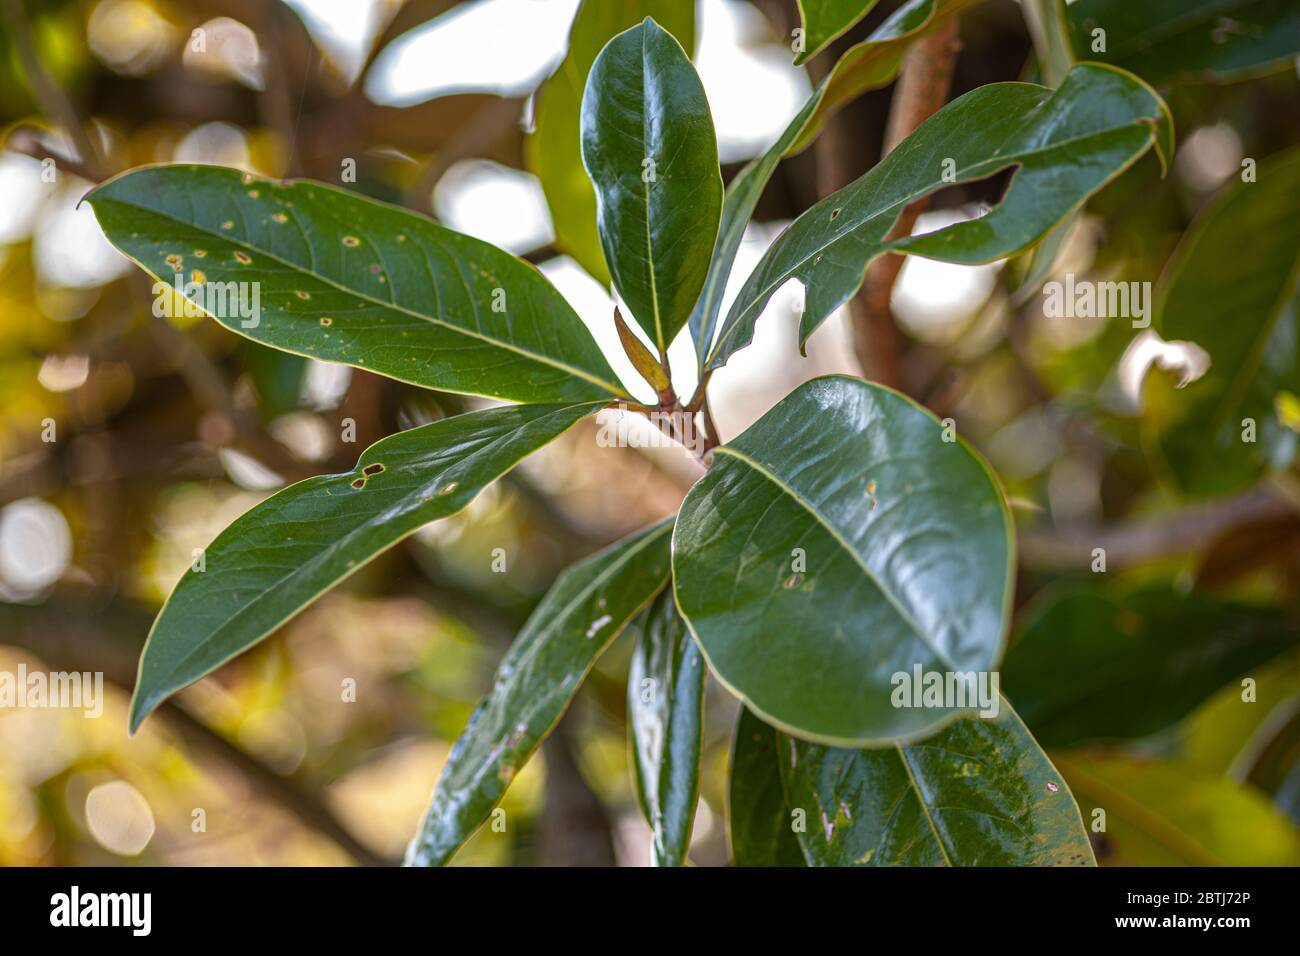 Magnolia leaves detail Stock Photo